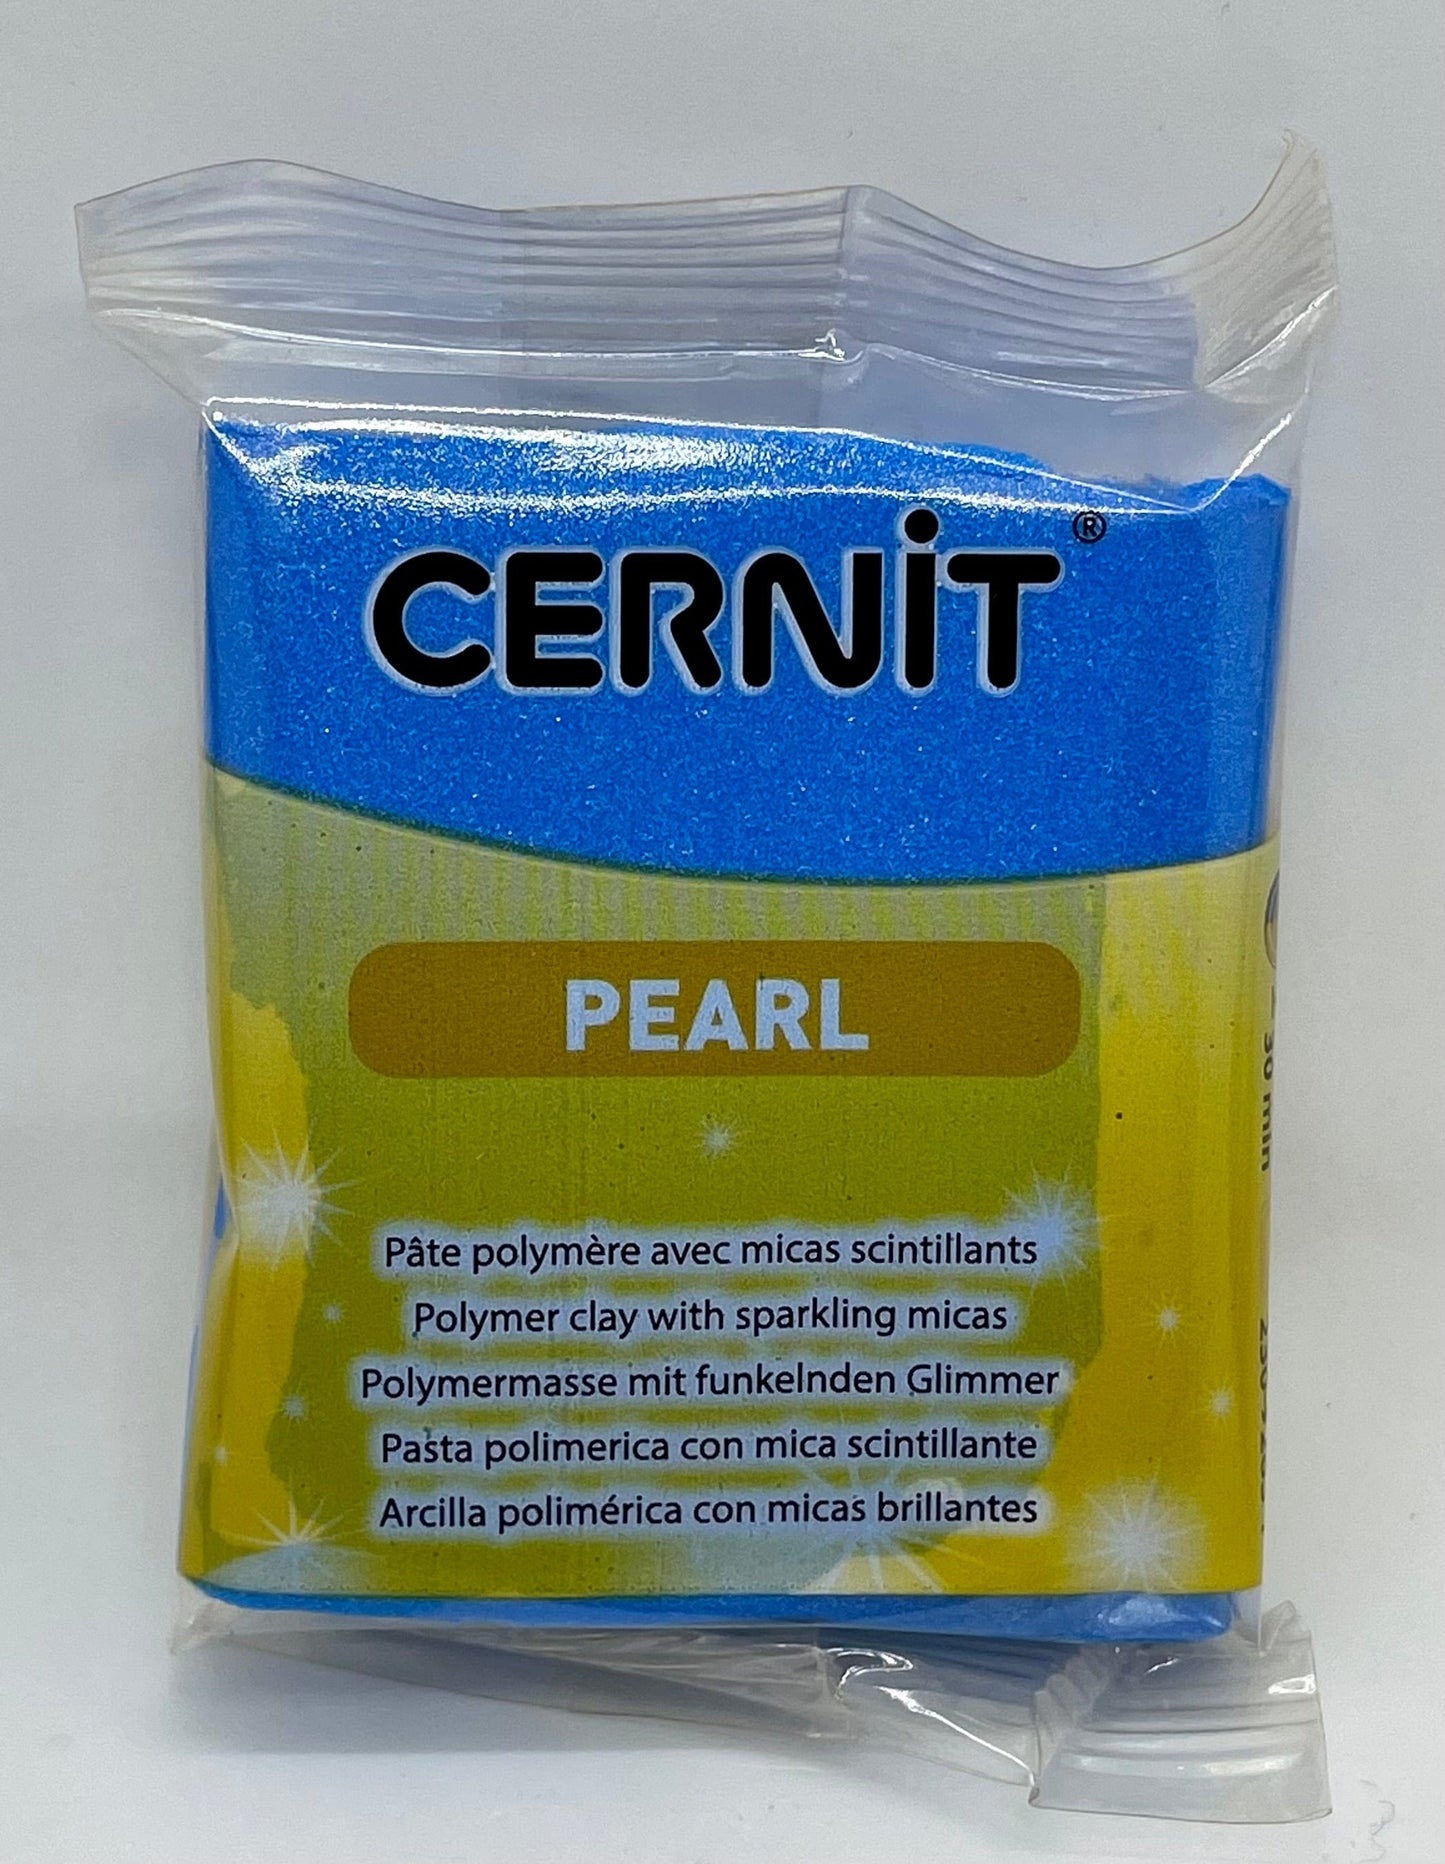 Cernit Pearl pâte polymère